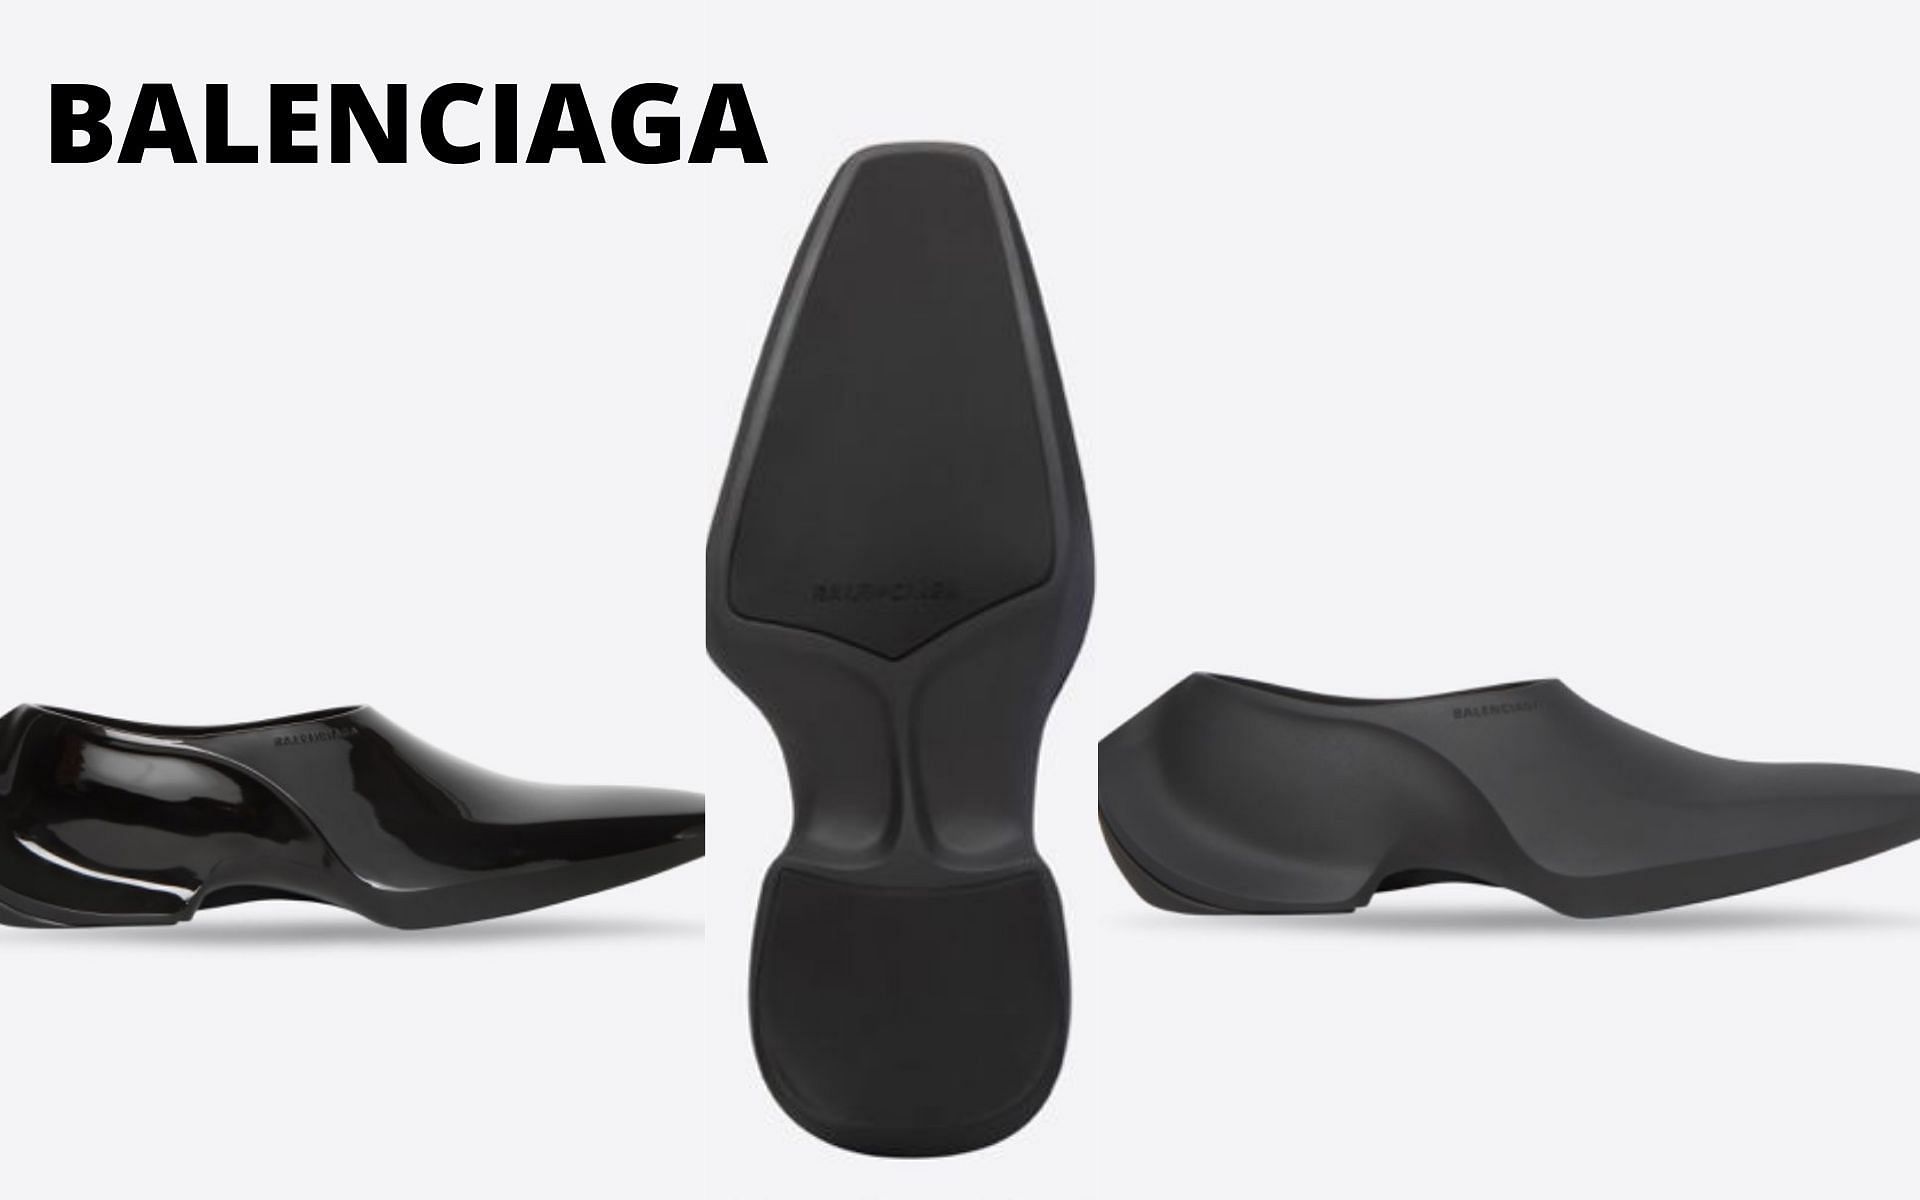 Balenciaga launched its black Space Shoes (Image via Balenciaga)